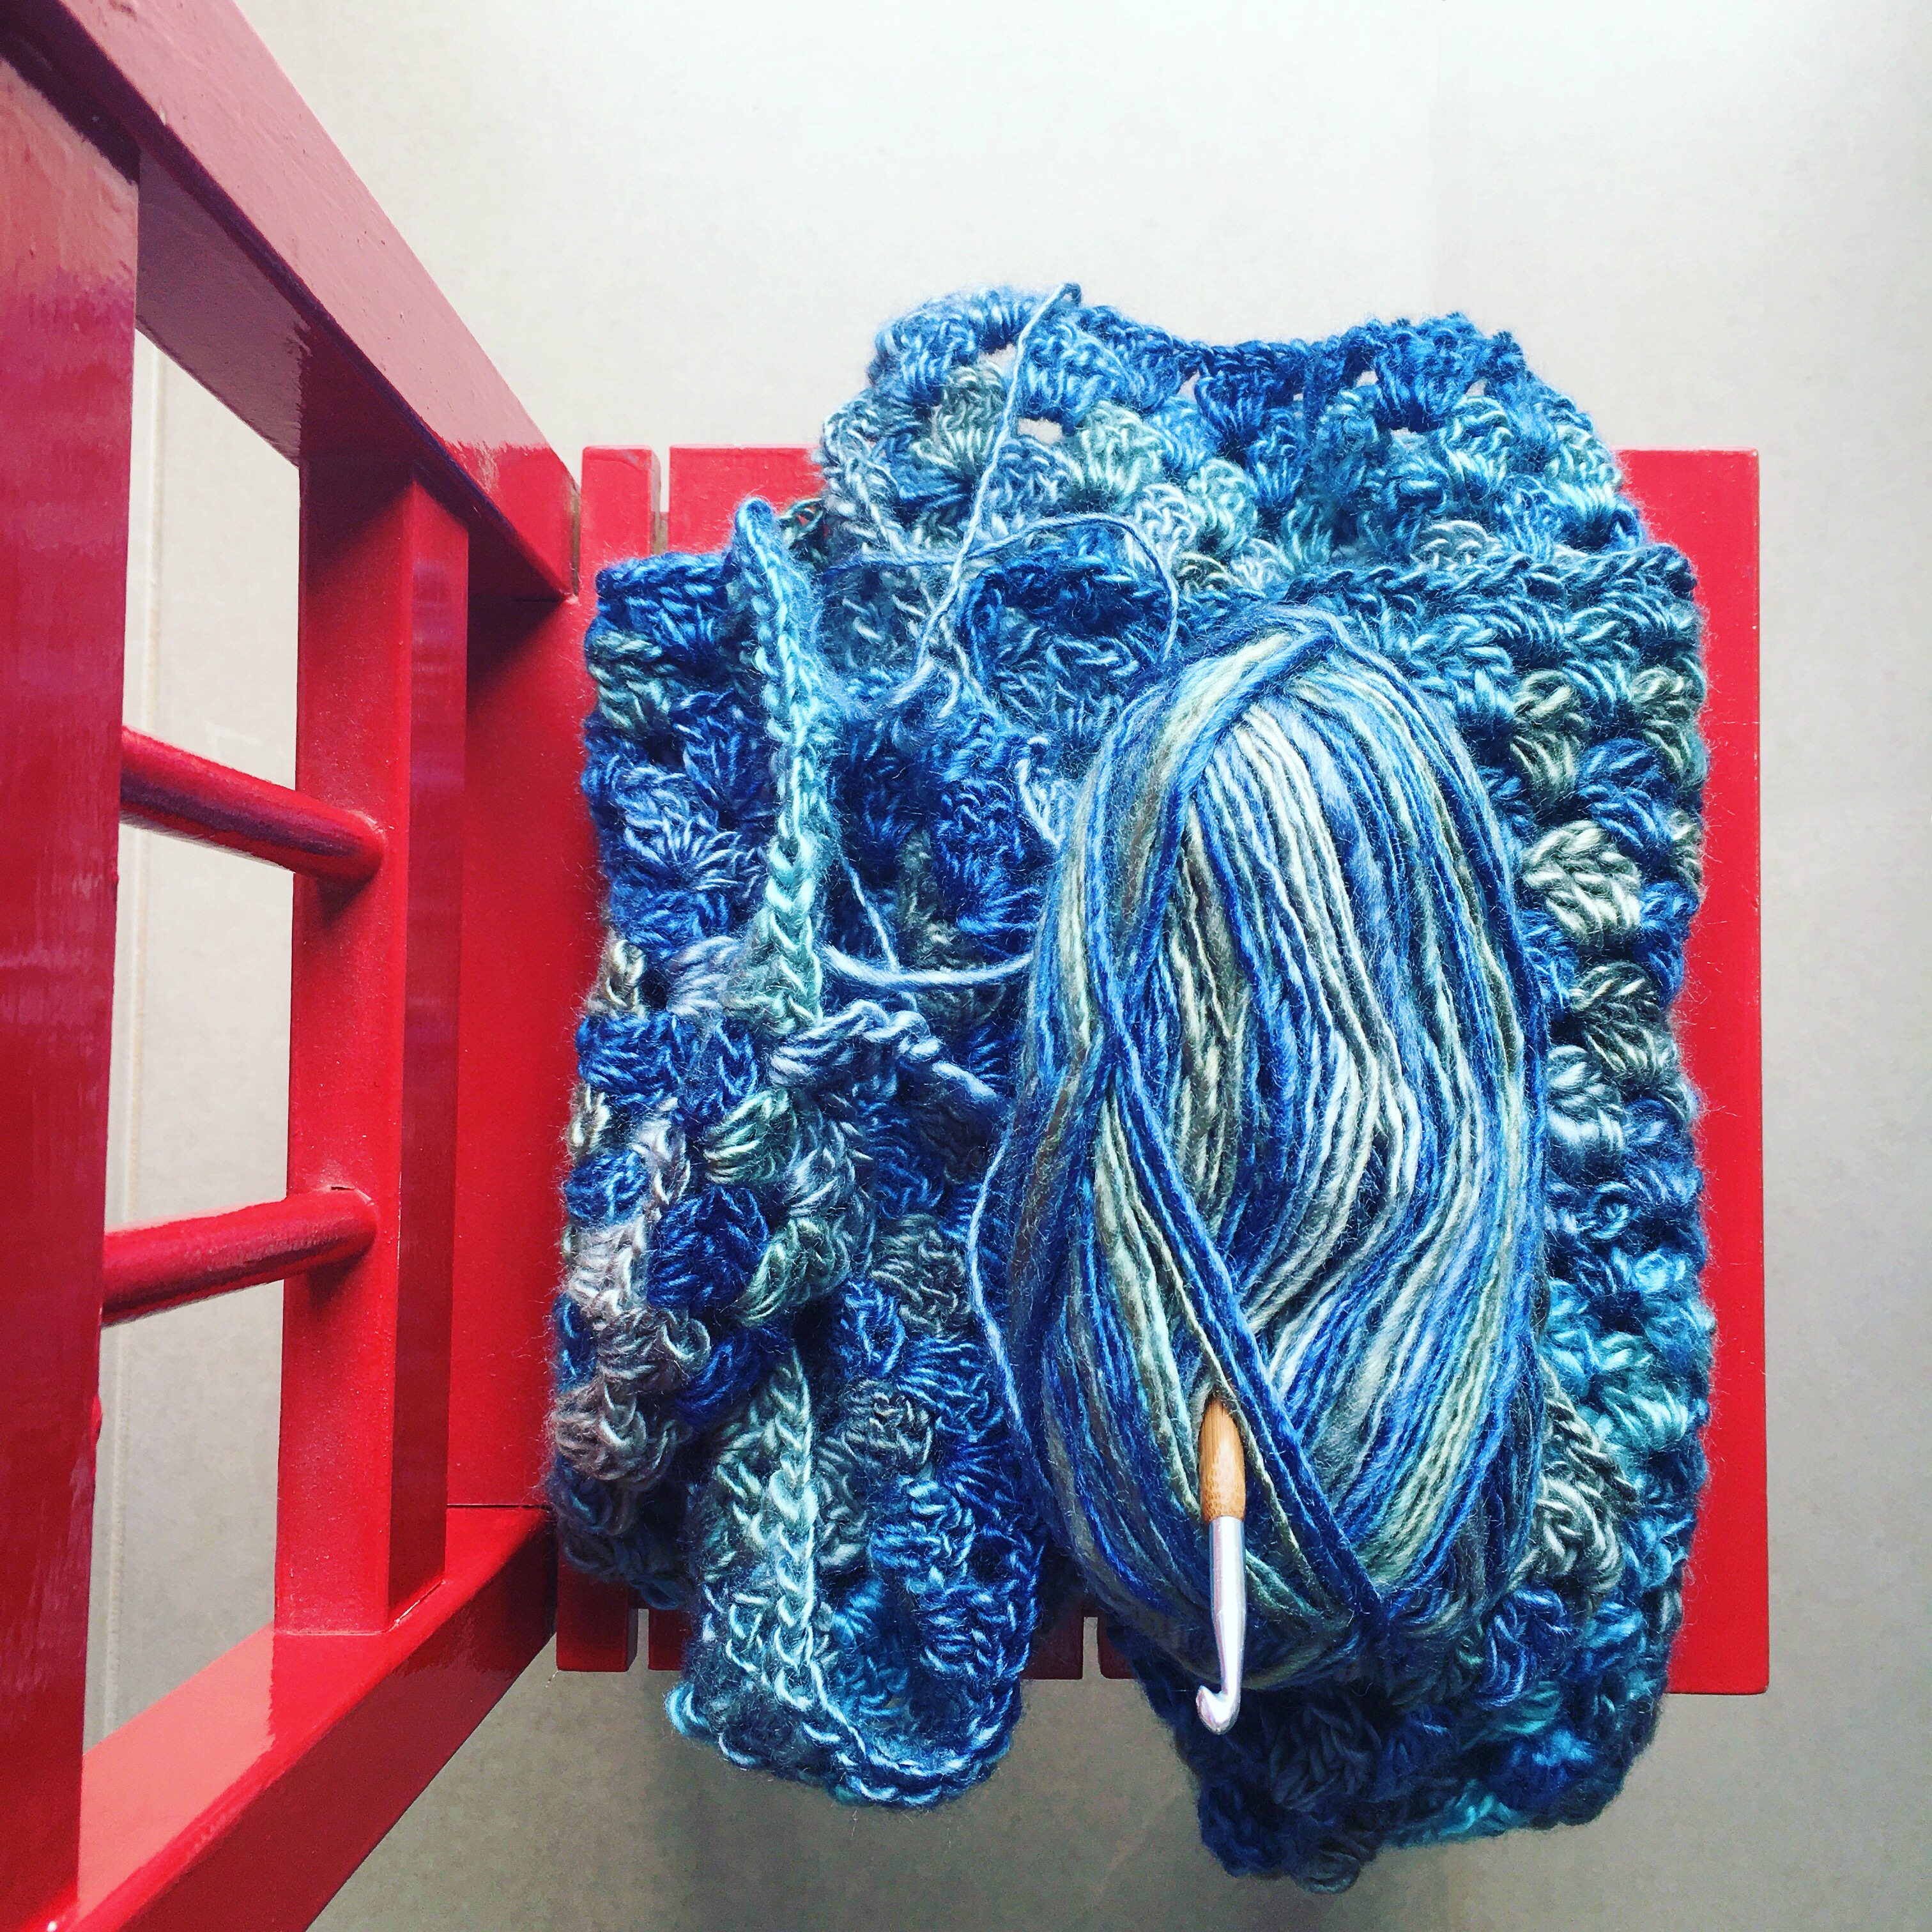 4 Ways to Crochet in the Heat